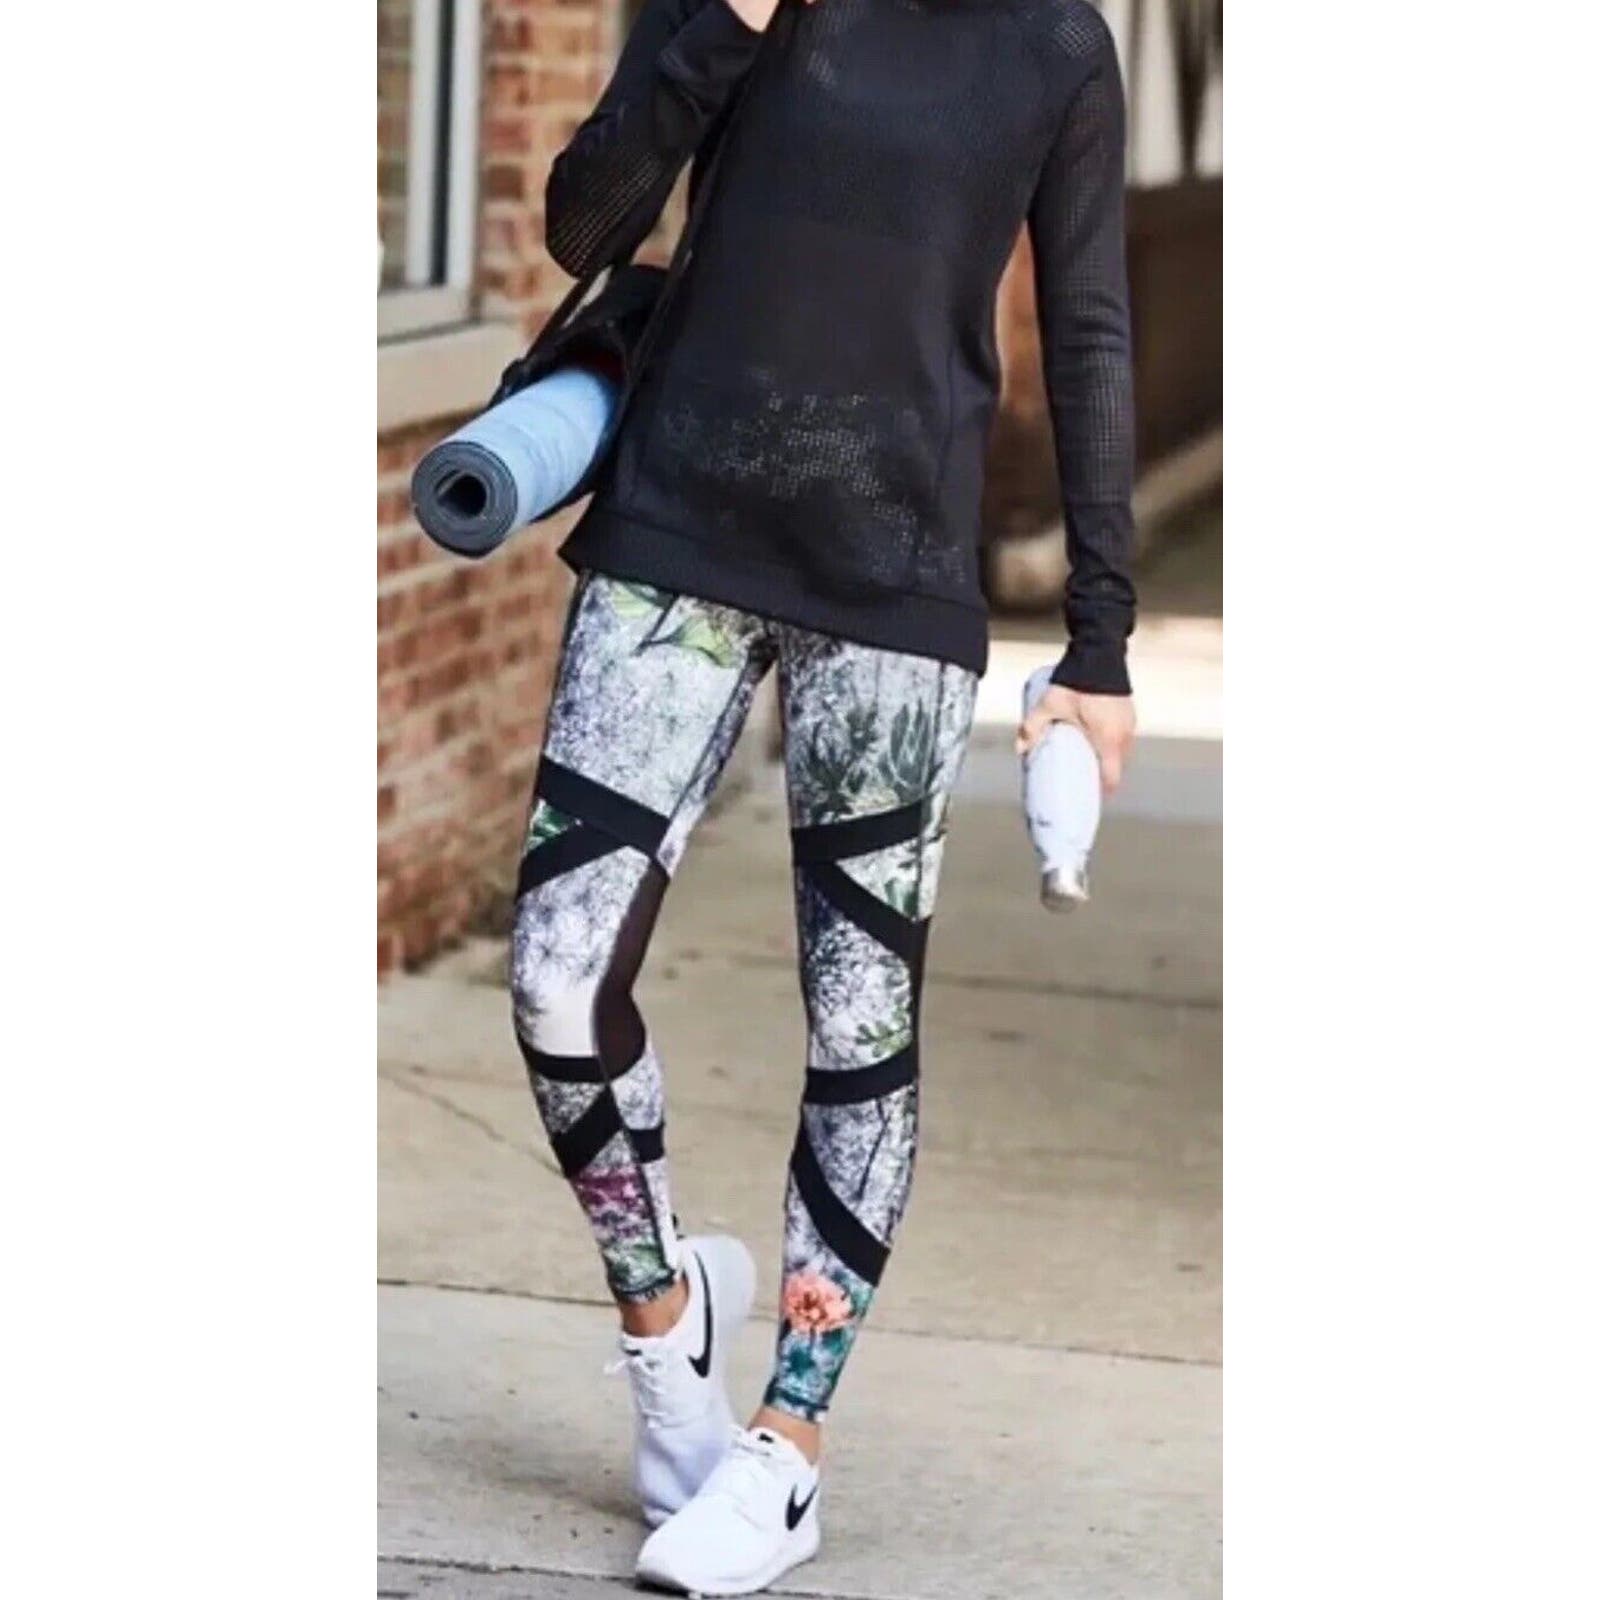 CALIA Carrie Underwood Leggings Medium Black Floral Running Pant Limited Edition